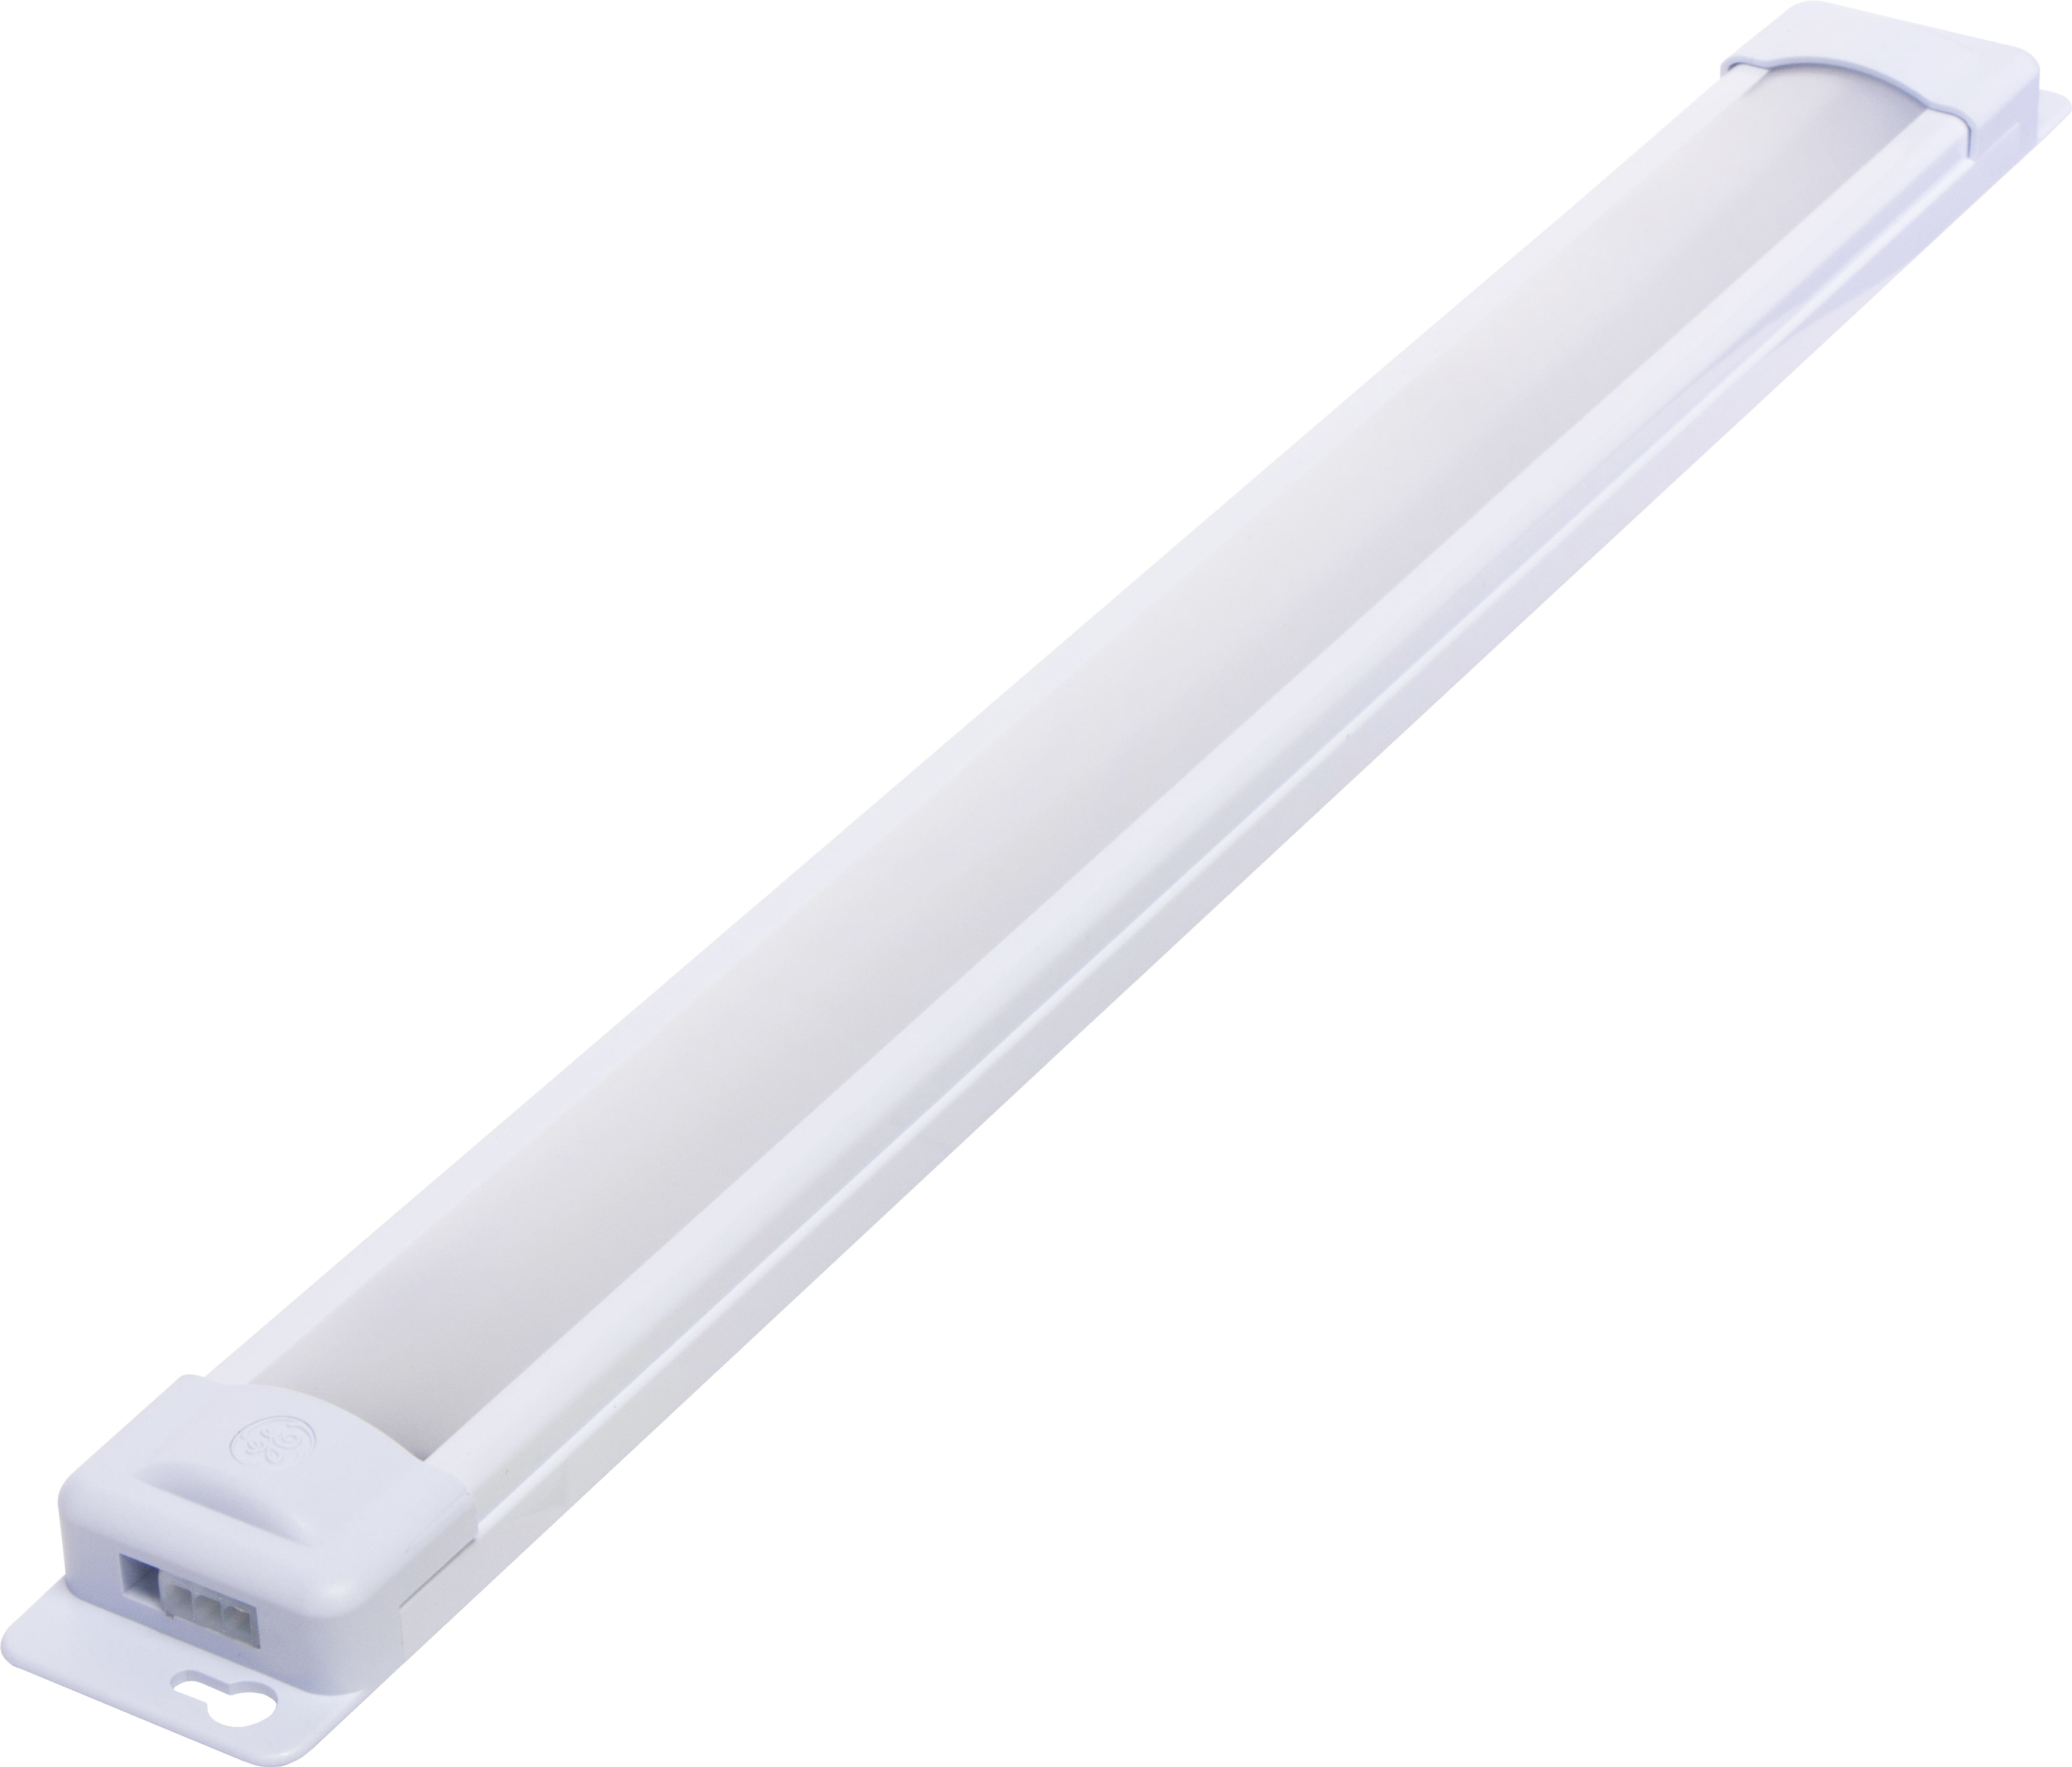 Warm White GE Basic 18 Inch Fluorescent Under Cabinet Light Fixture Plug In 